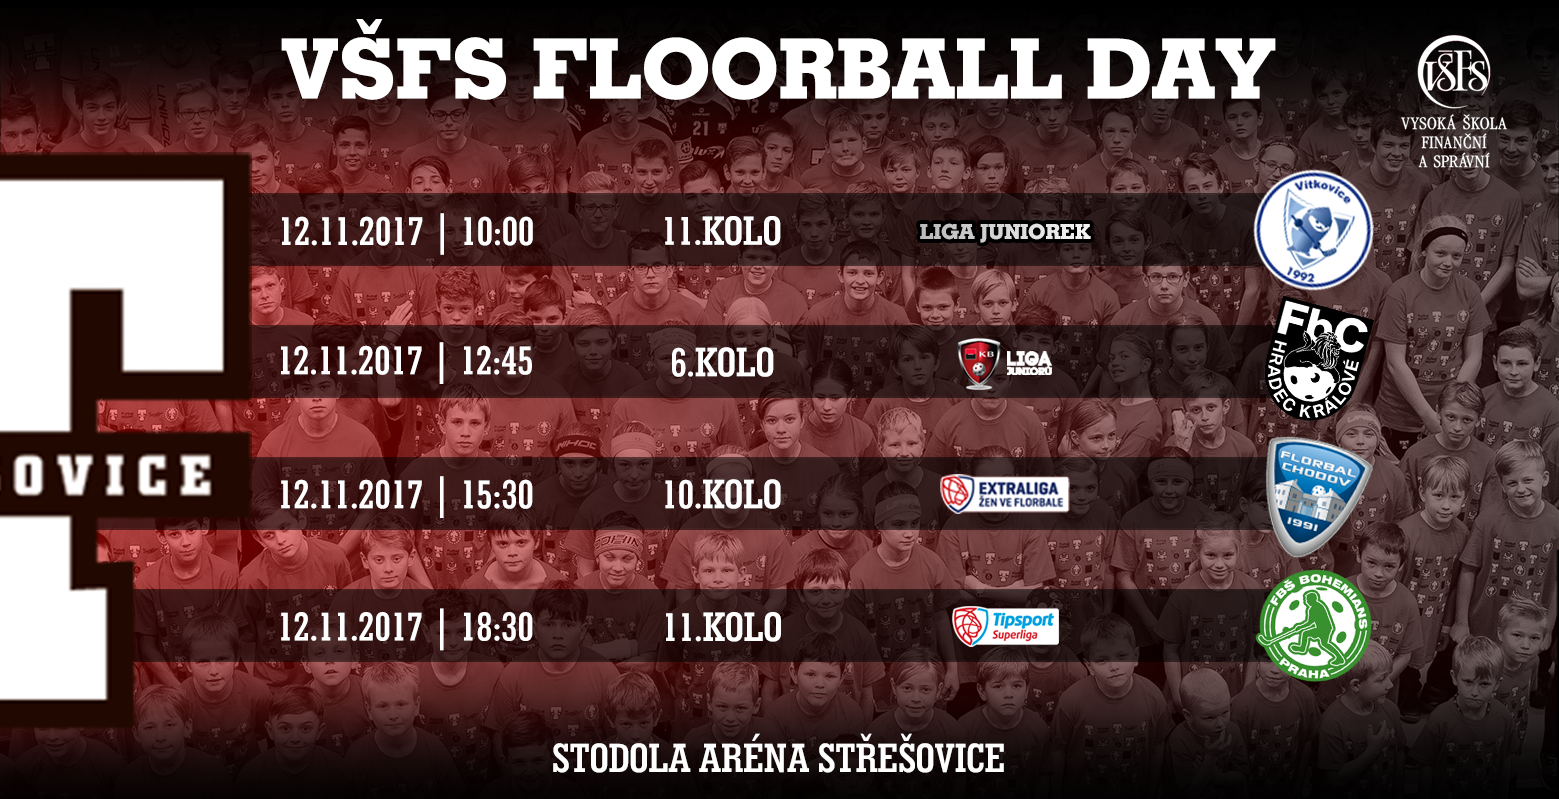 VFS Floorball Day: 4 elitn tmy v jeden den ve Stodole! 